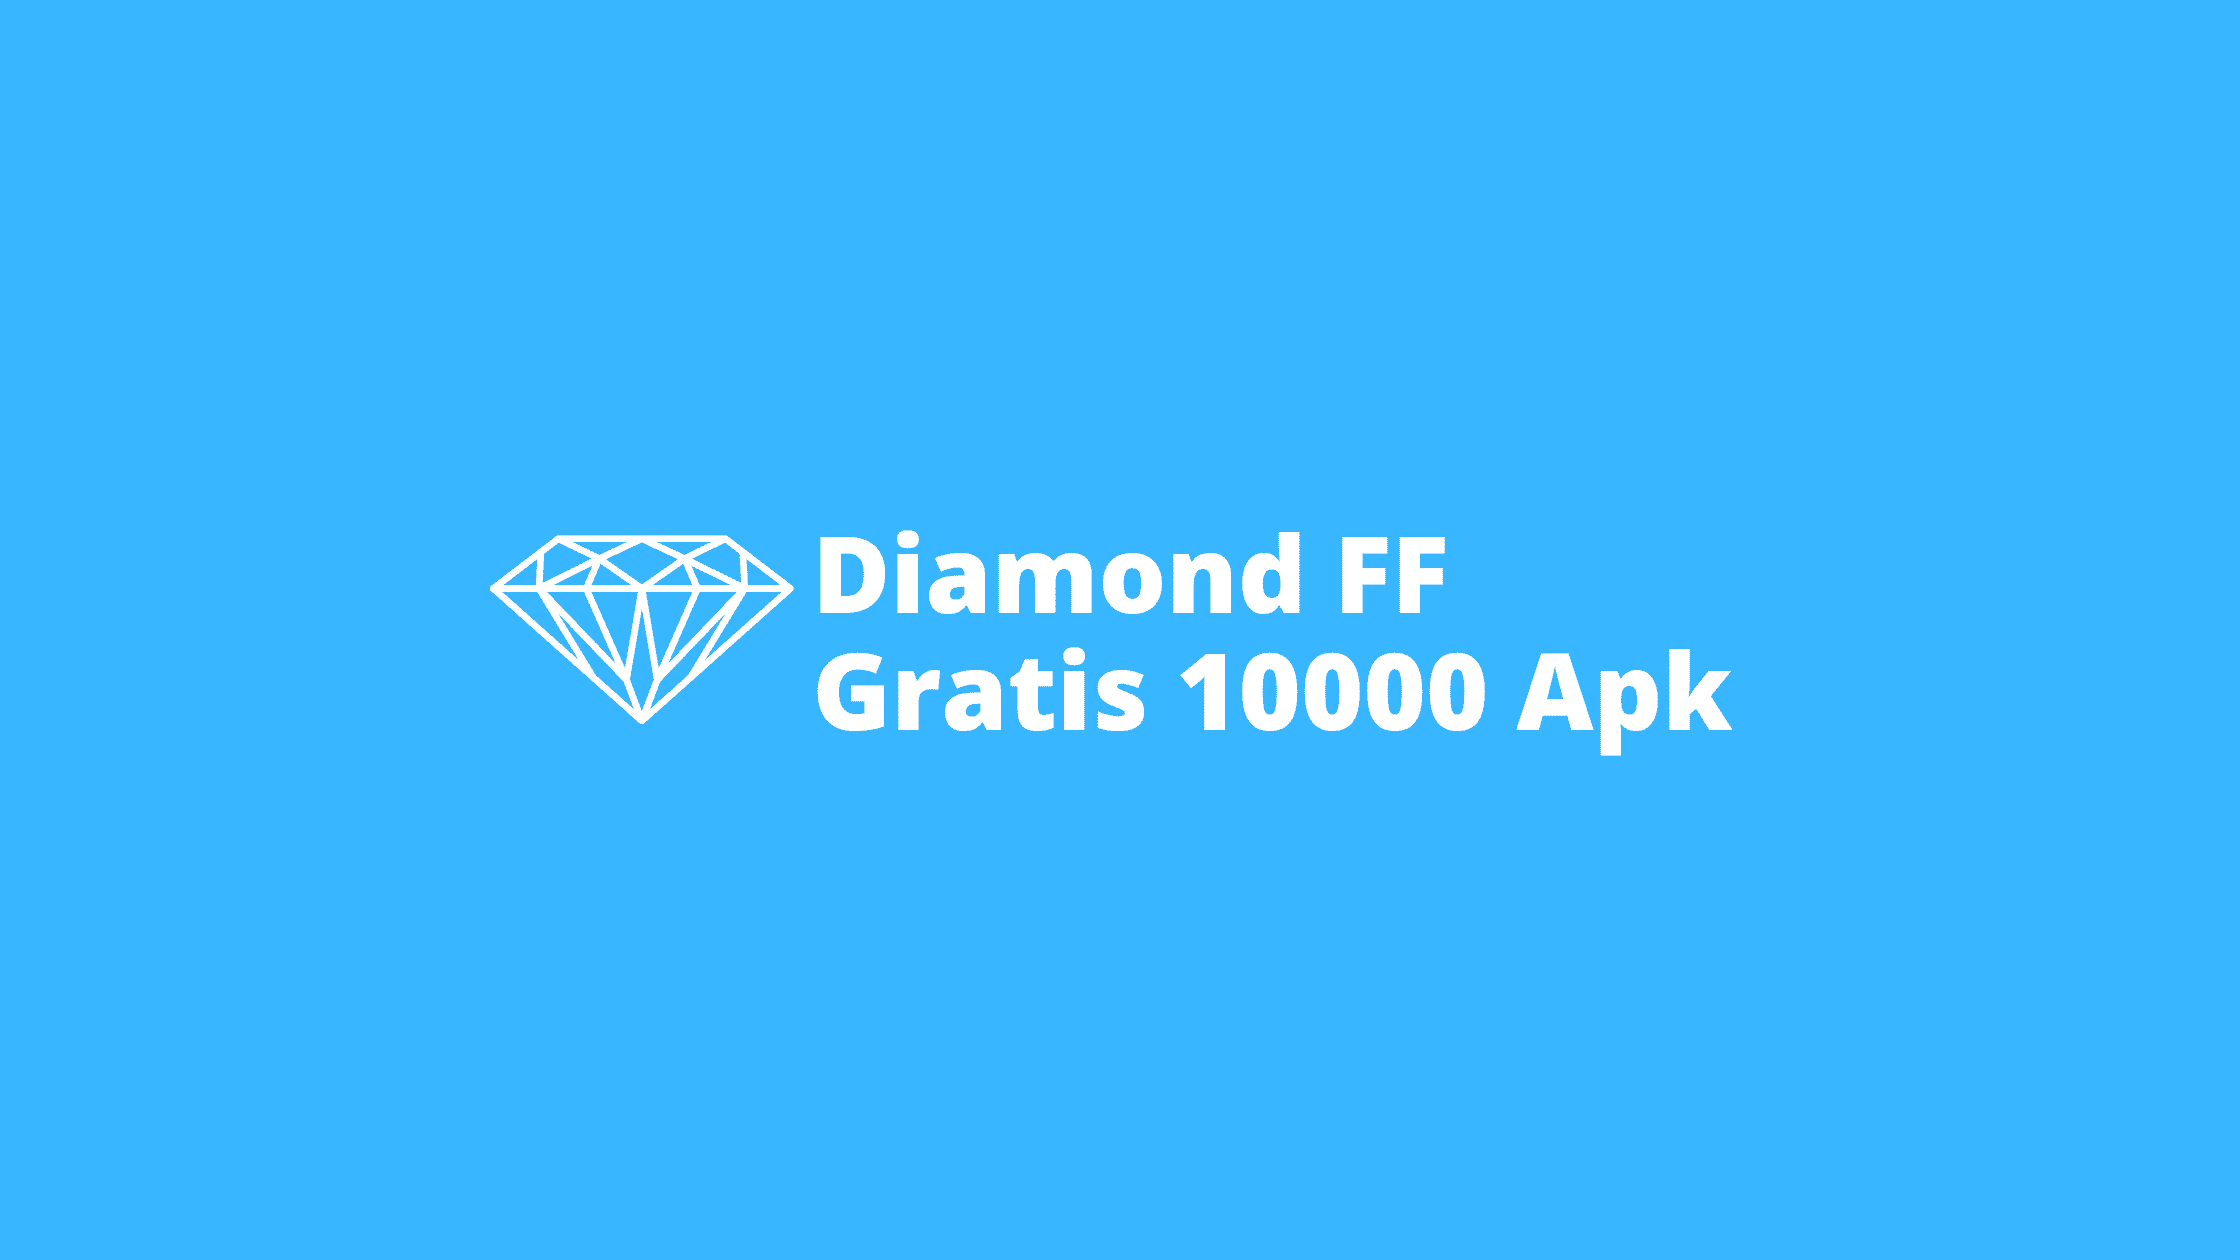 Diamond FF Gratis 10000 Apk